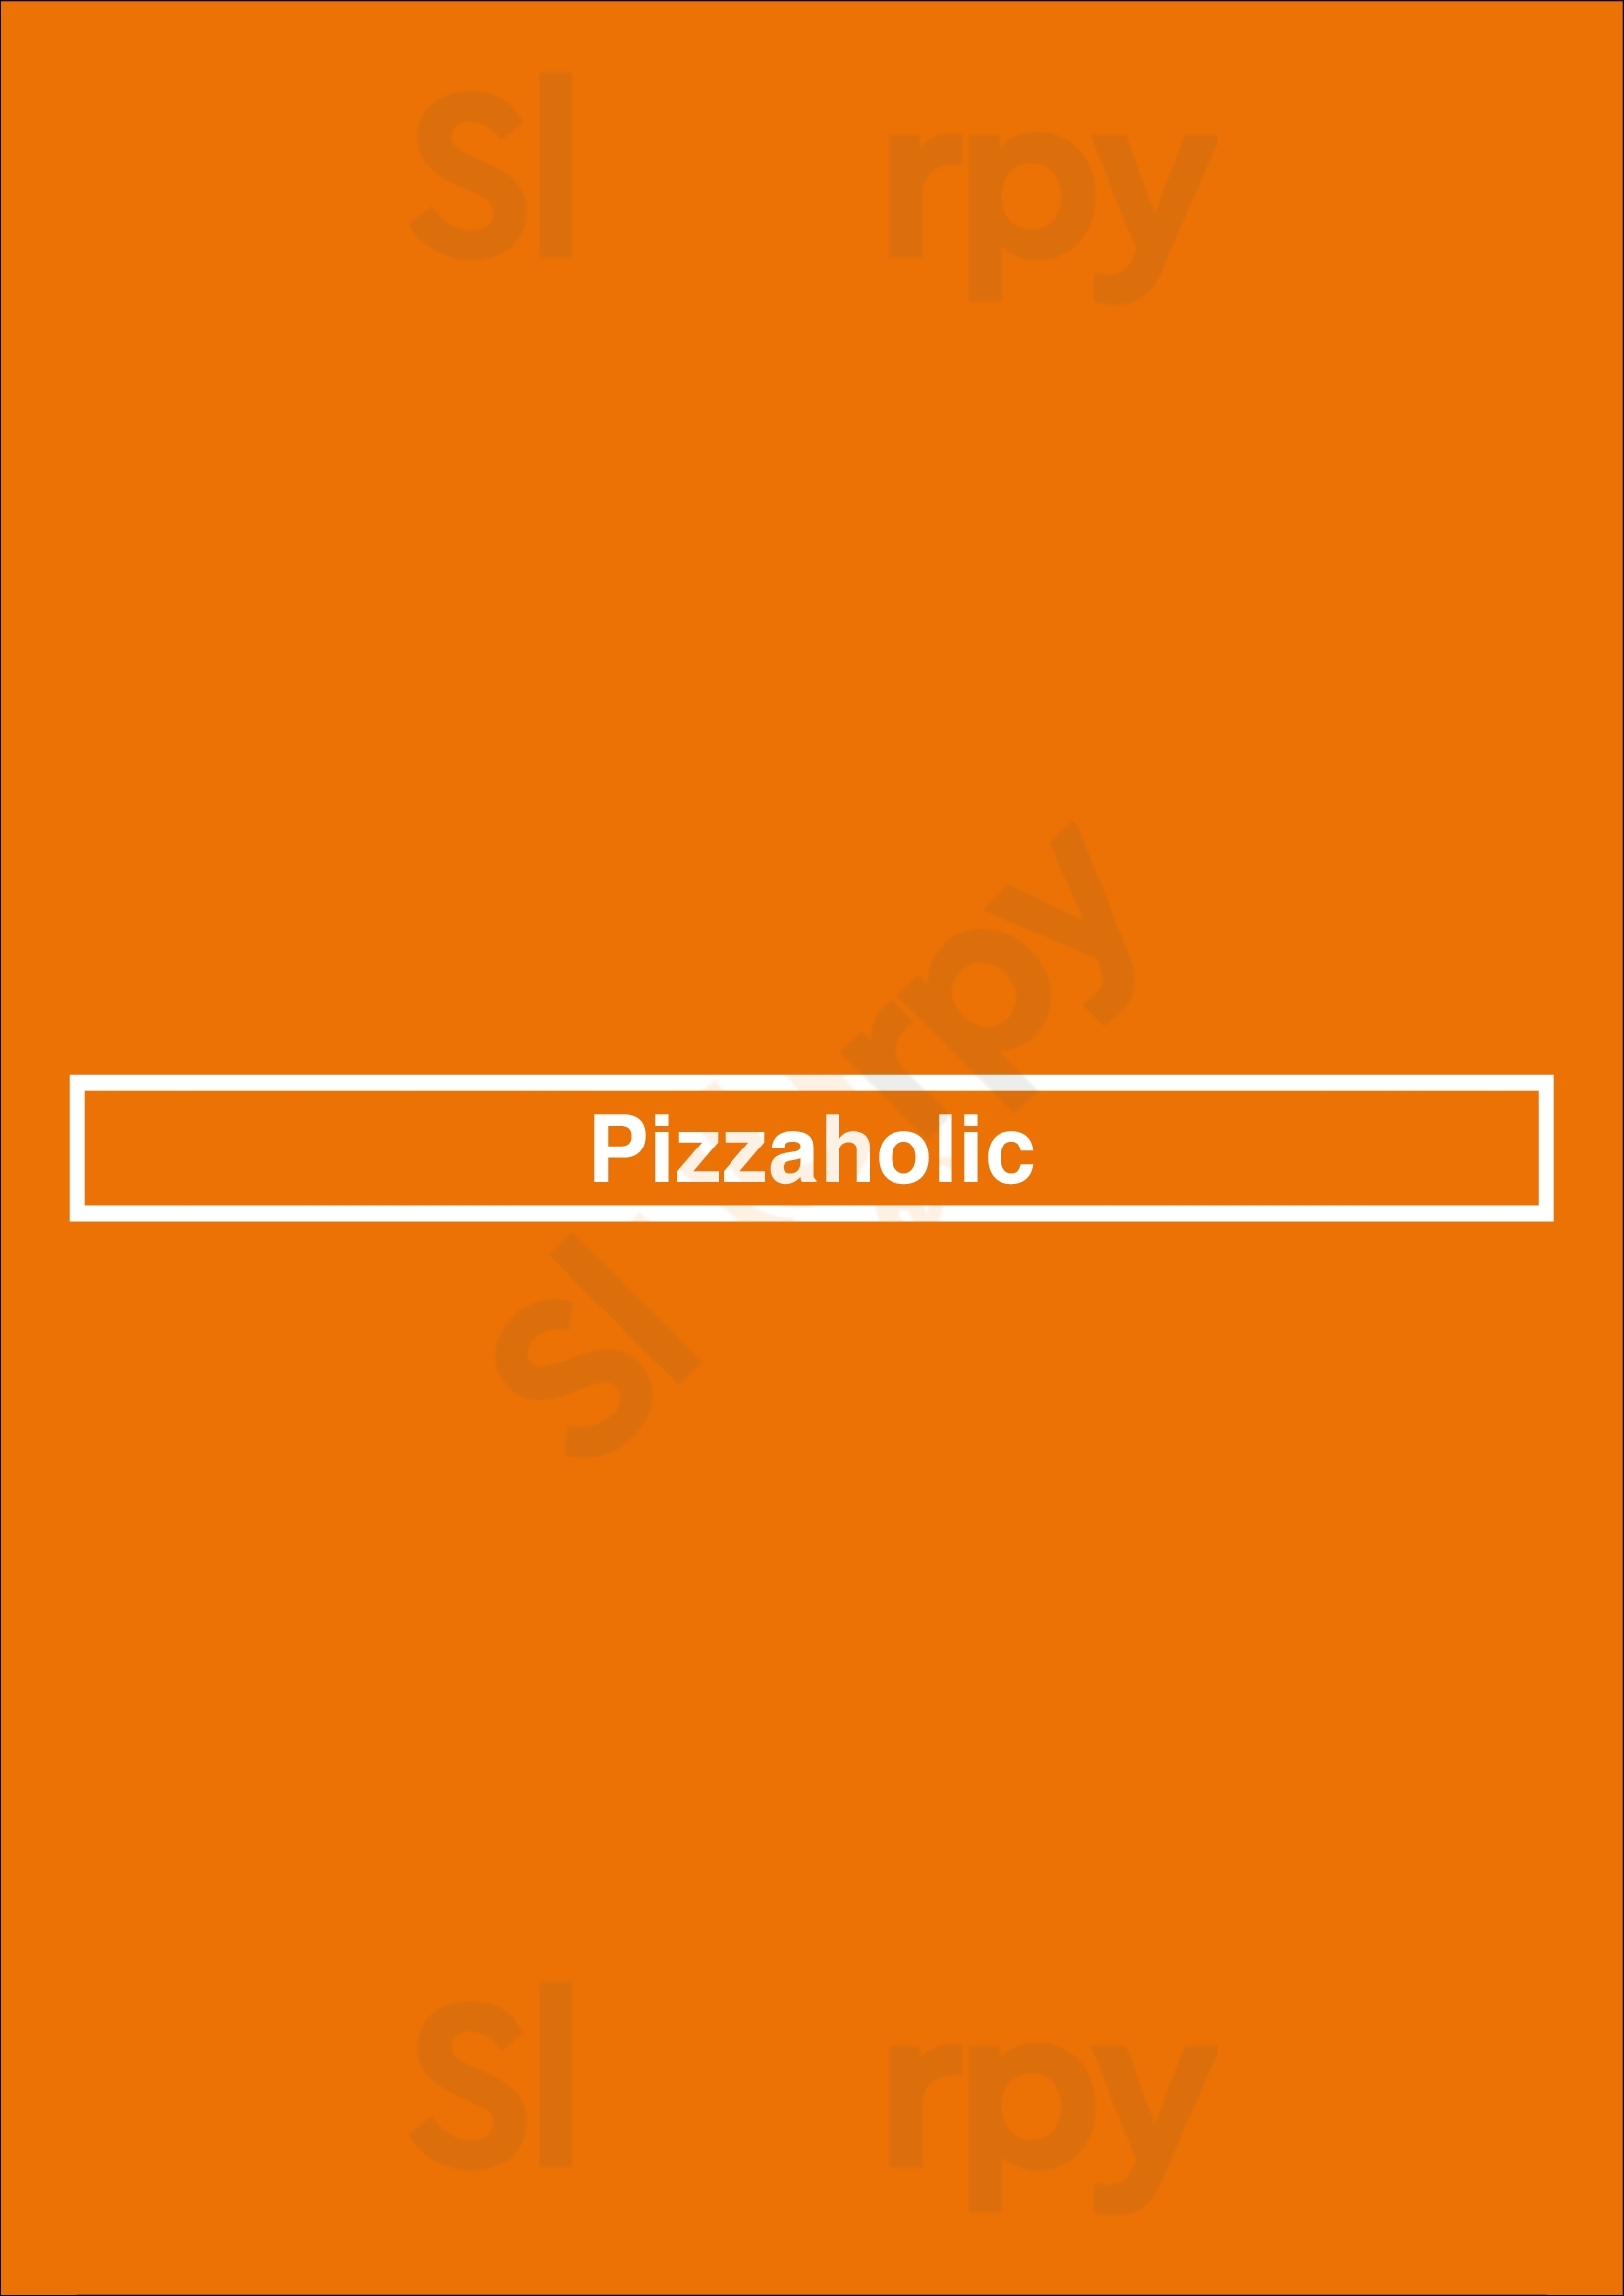 Pizzaholic Los Angeles Menu - 1